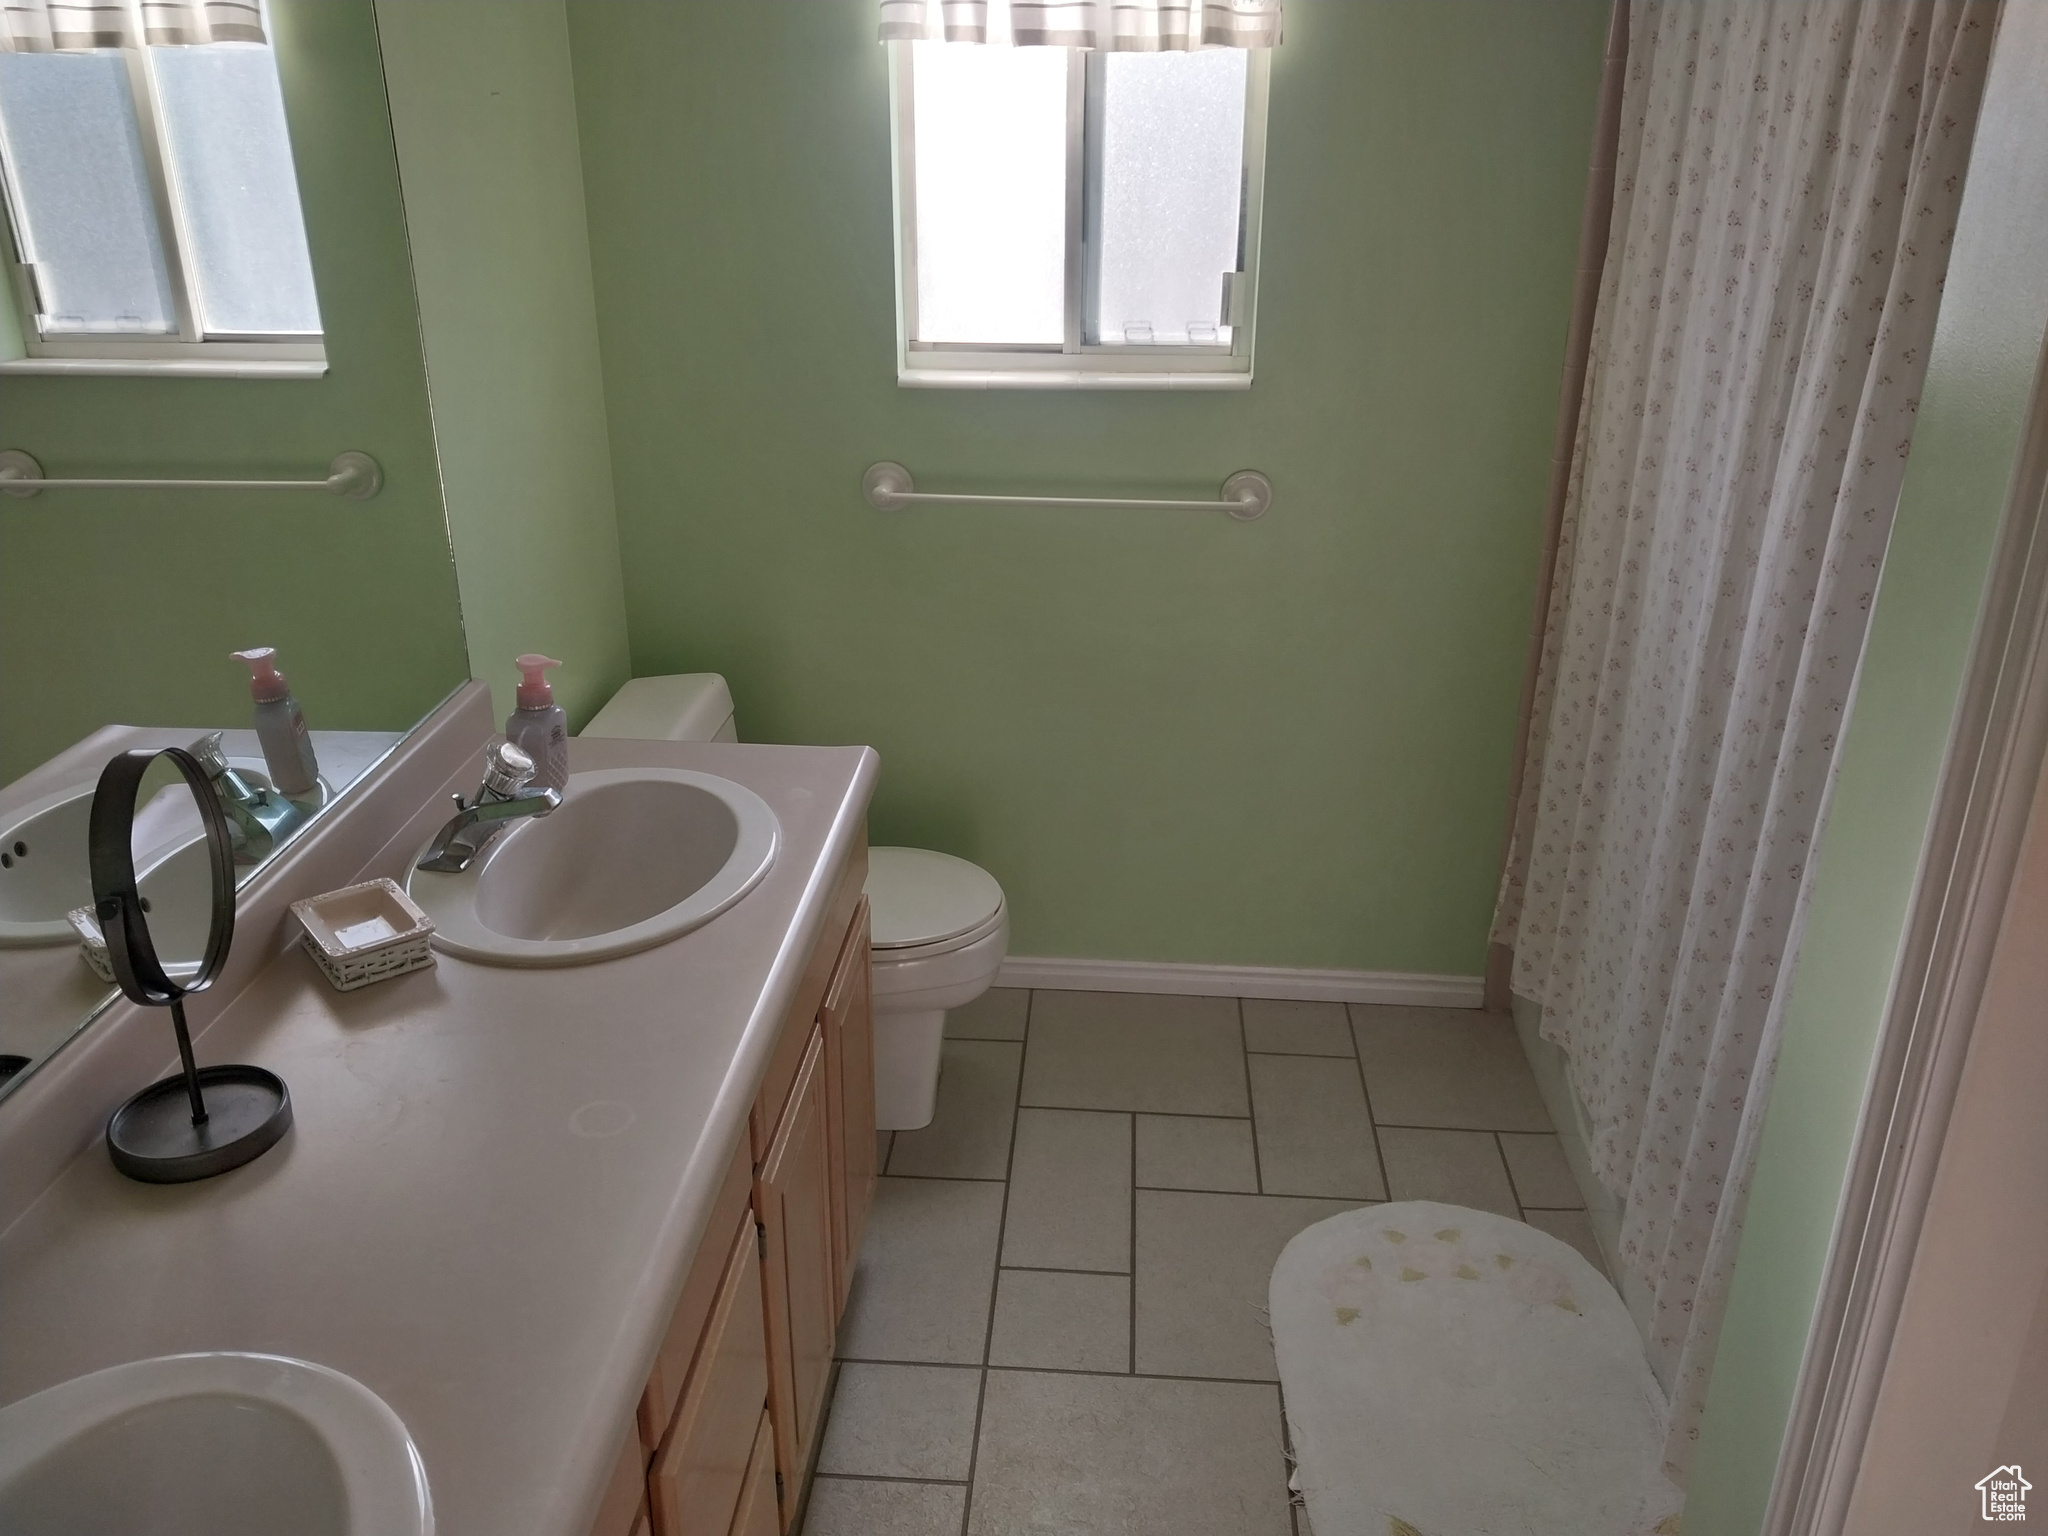 Bathroom featuring toilet, tile floors, and dual bowl vanity